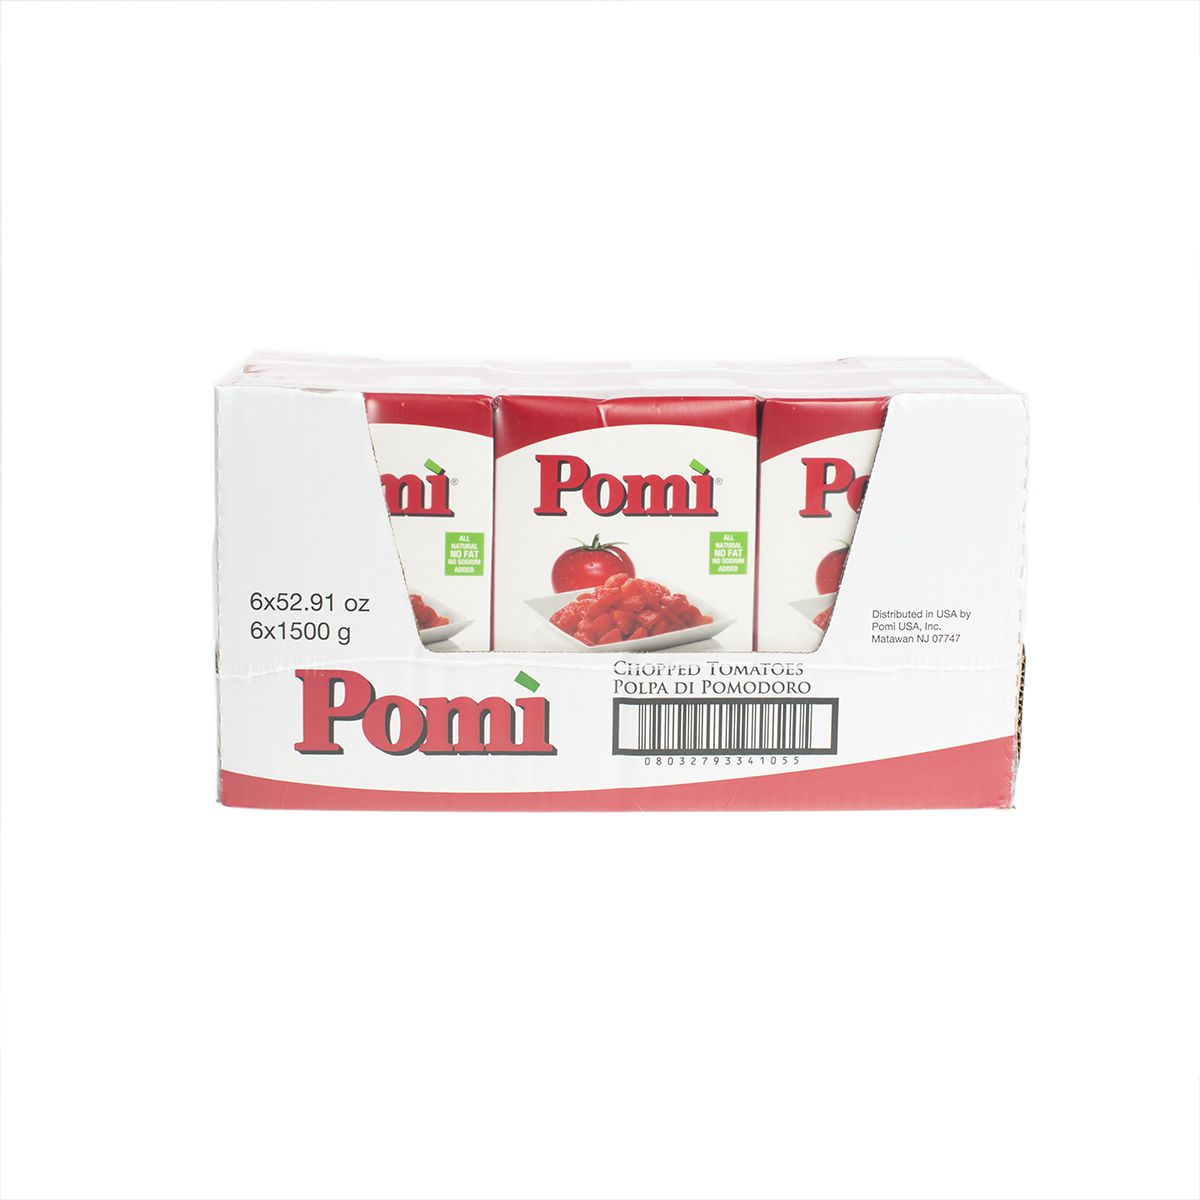 Pomi Chopped Tomatoes 53 oz Box